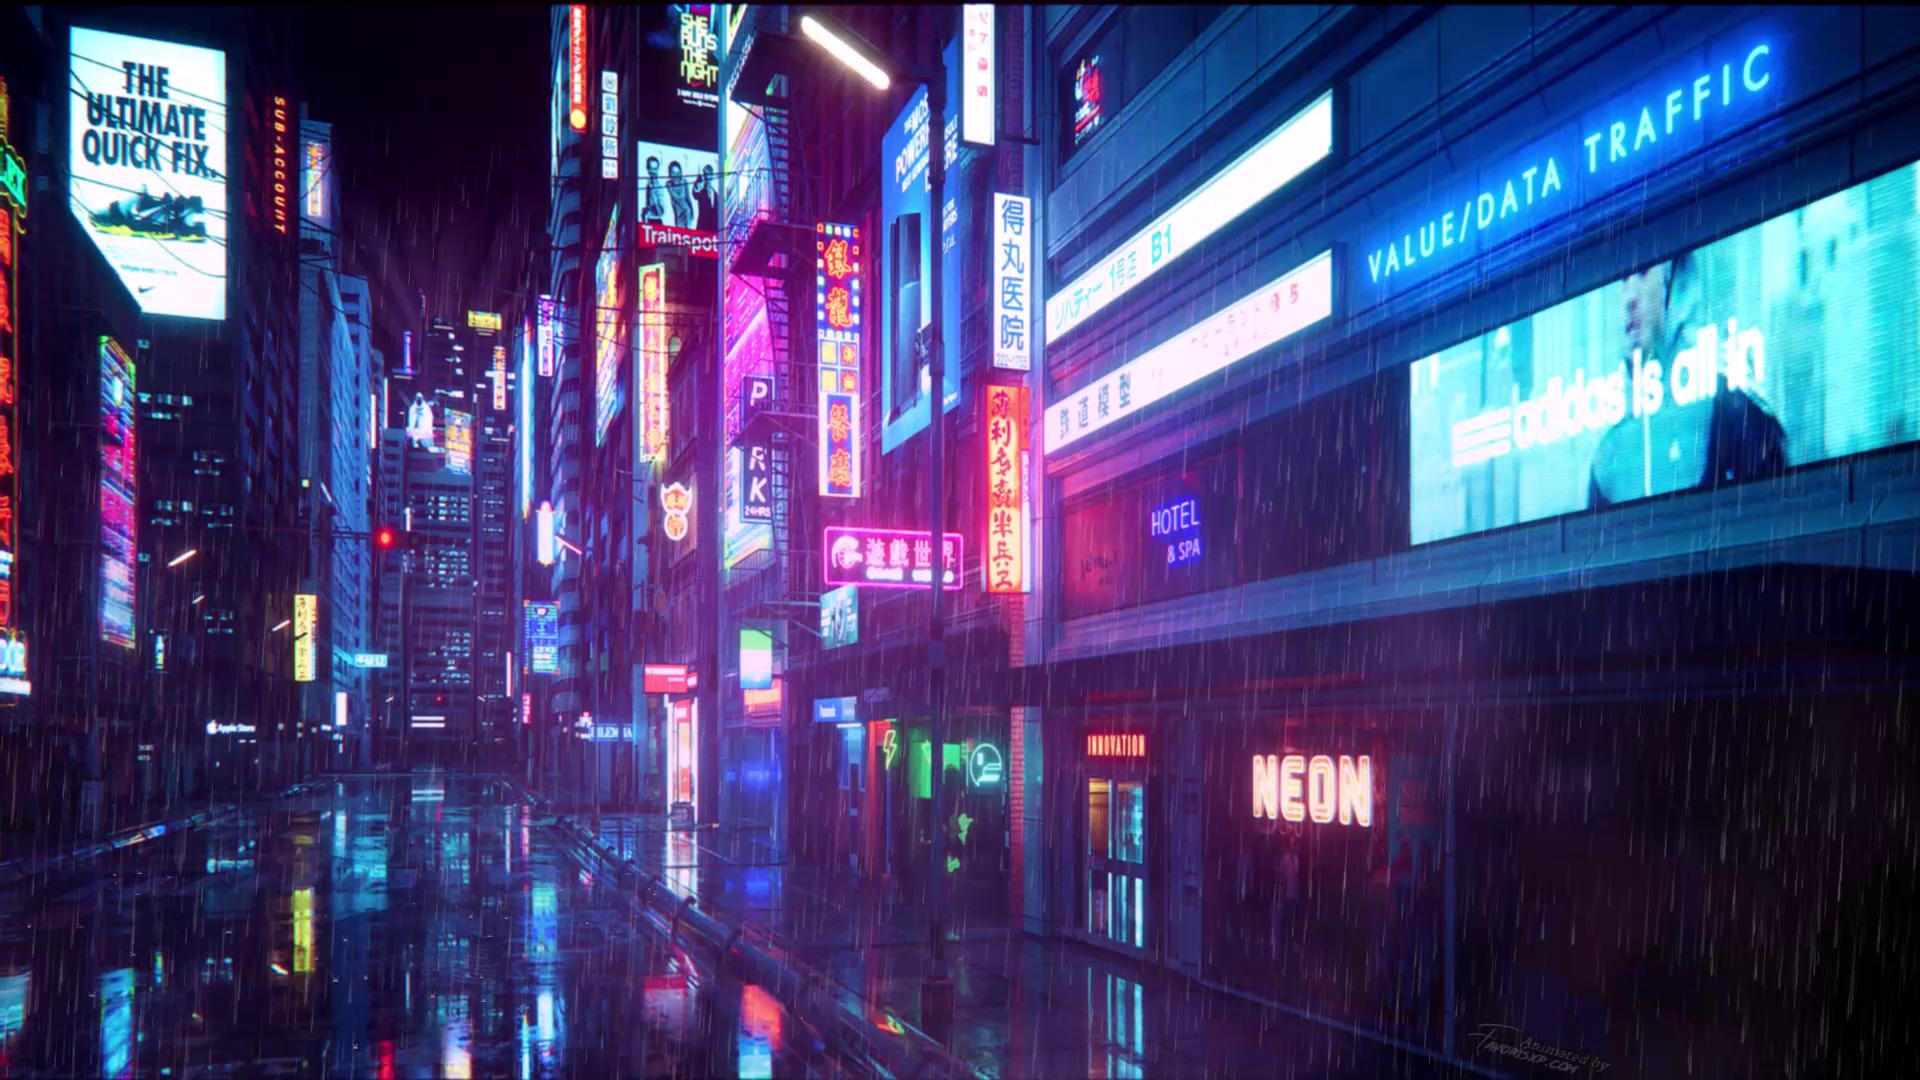 Anime Girl City Night Neon Cyberpunk 4k 